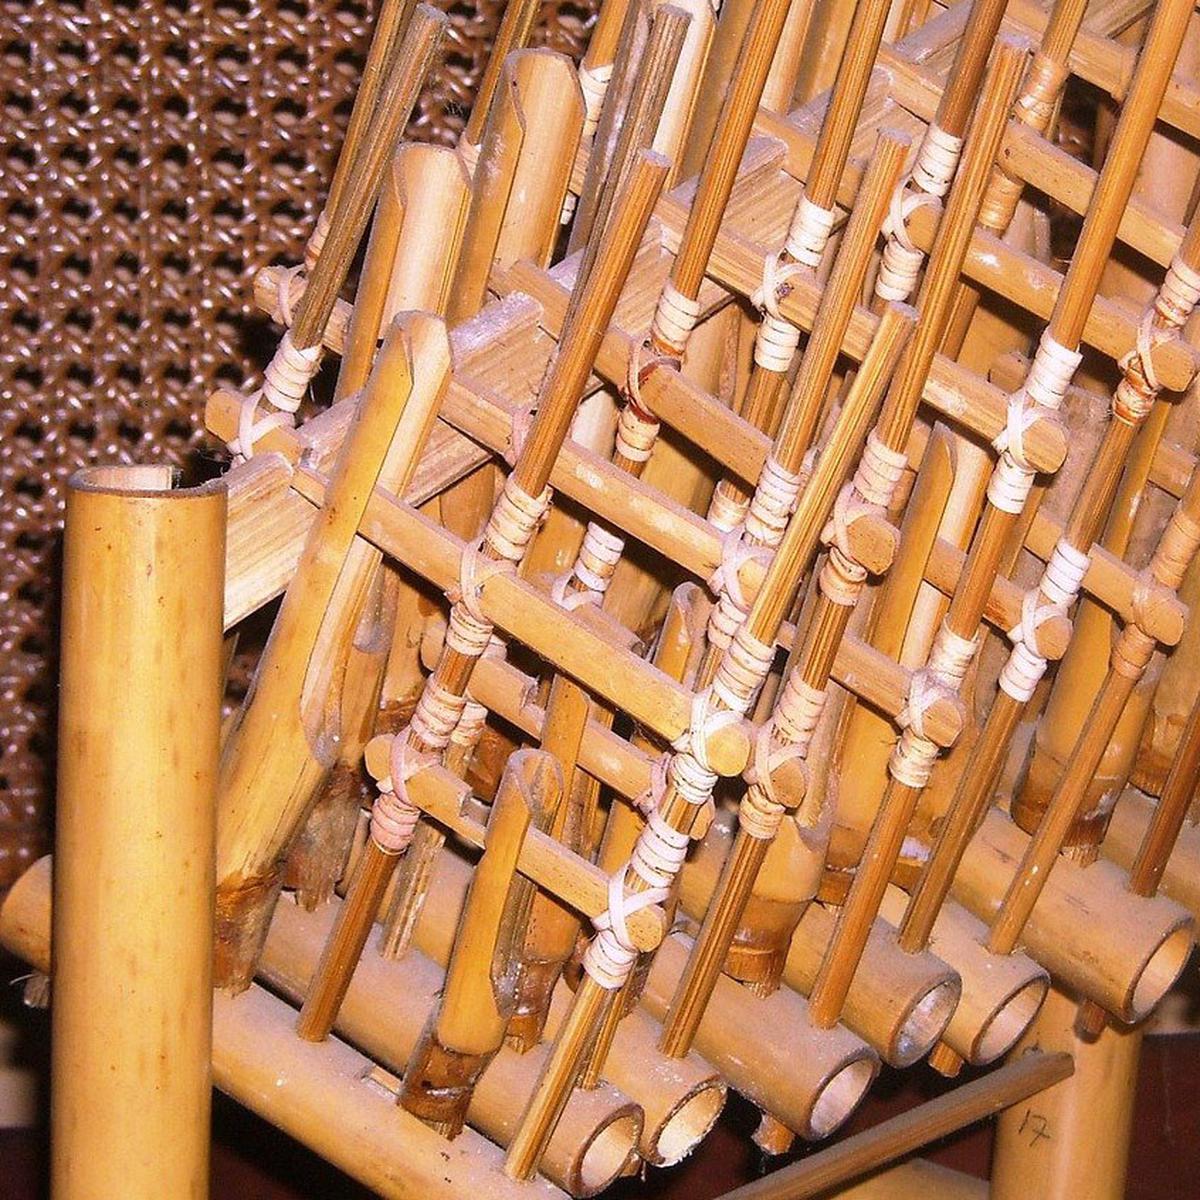 Lagu tradisional dari jawa tengah disajikan menggunakan alat musik